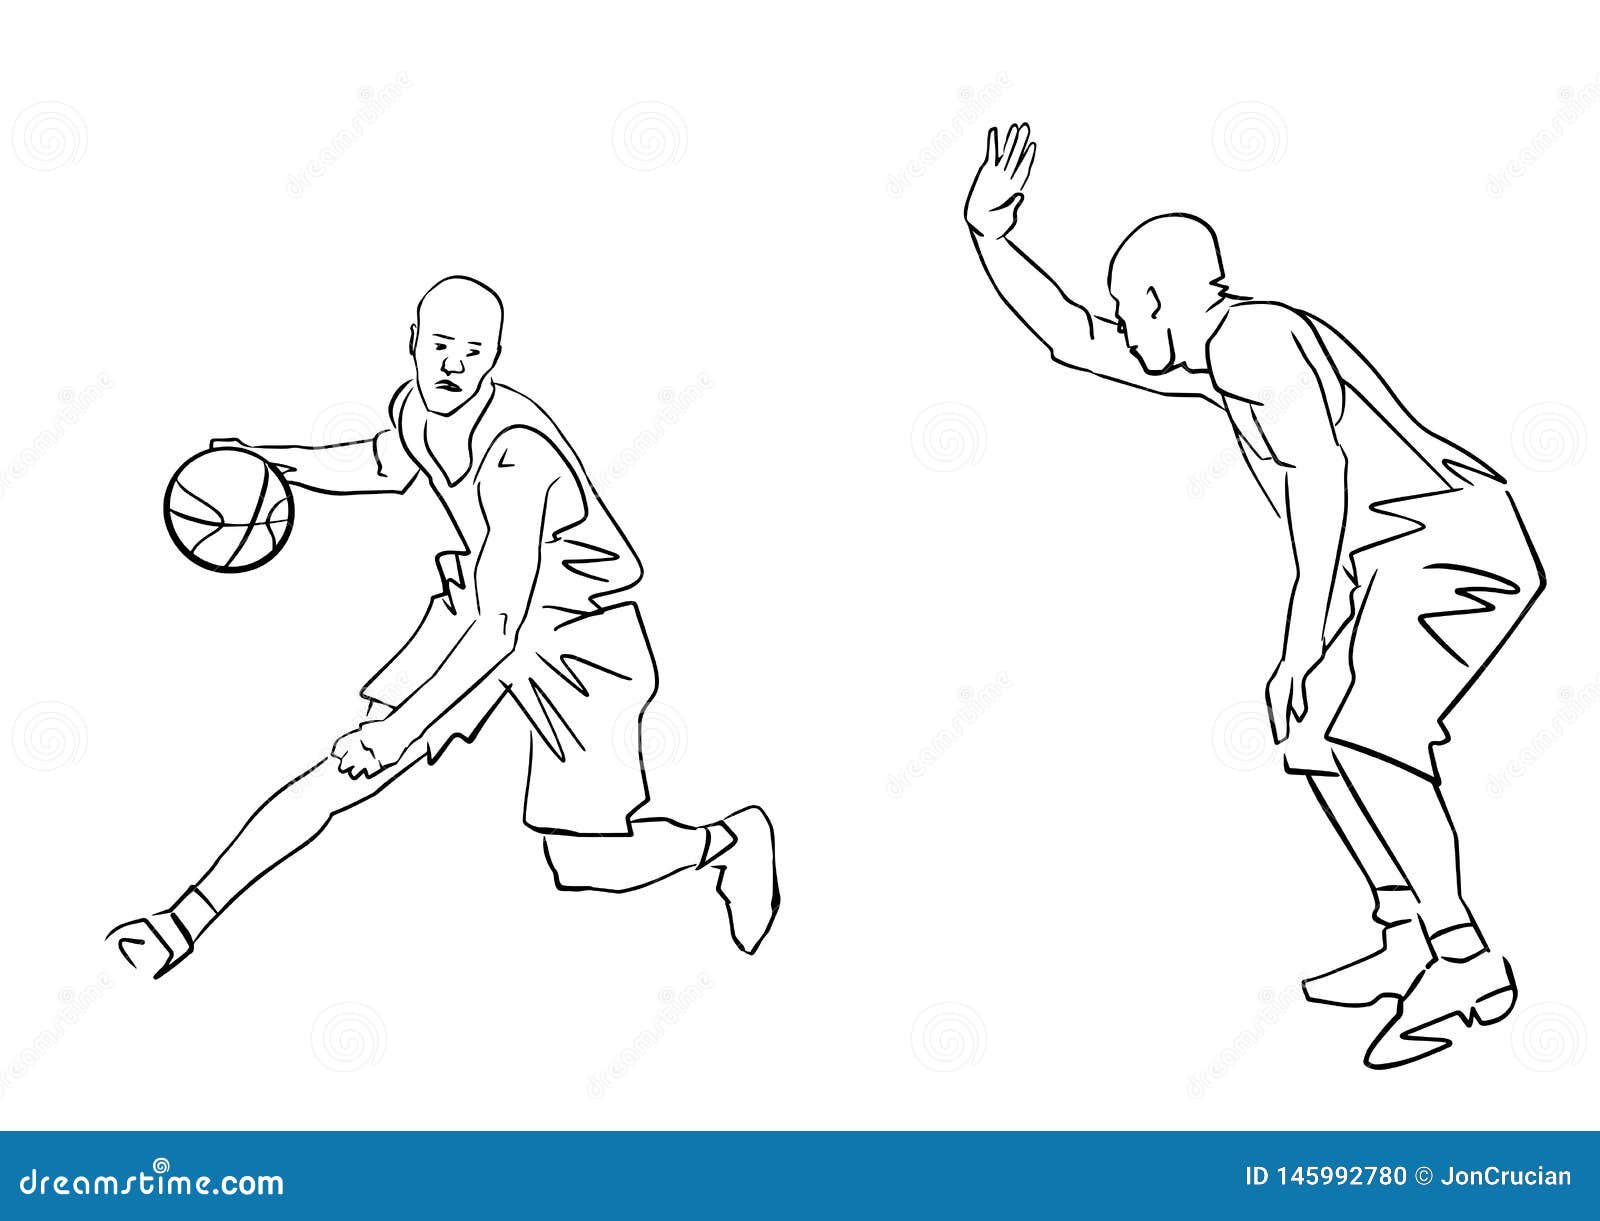 Animal Basketball Player Sketch Drawings Statistic Pose for Kindergarten